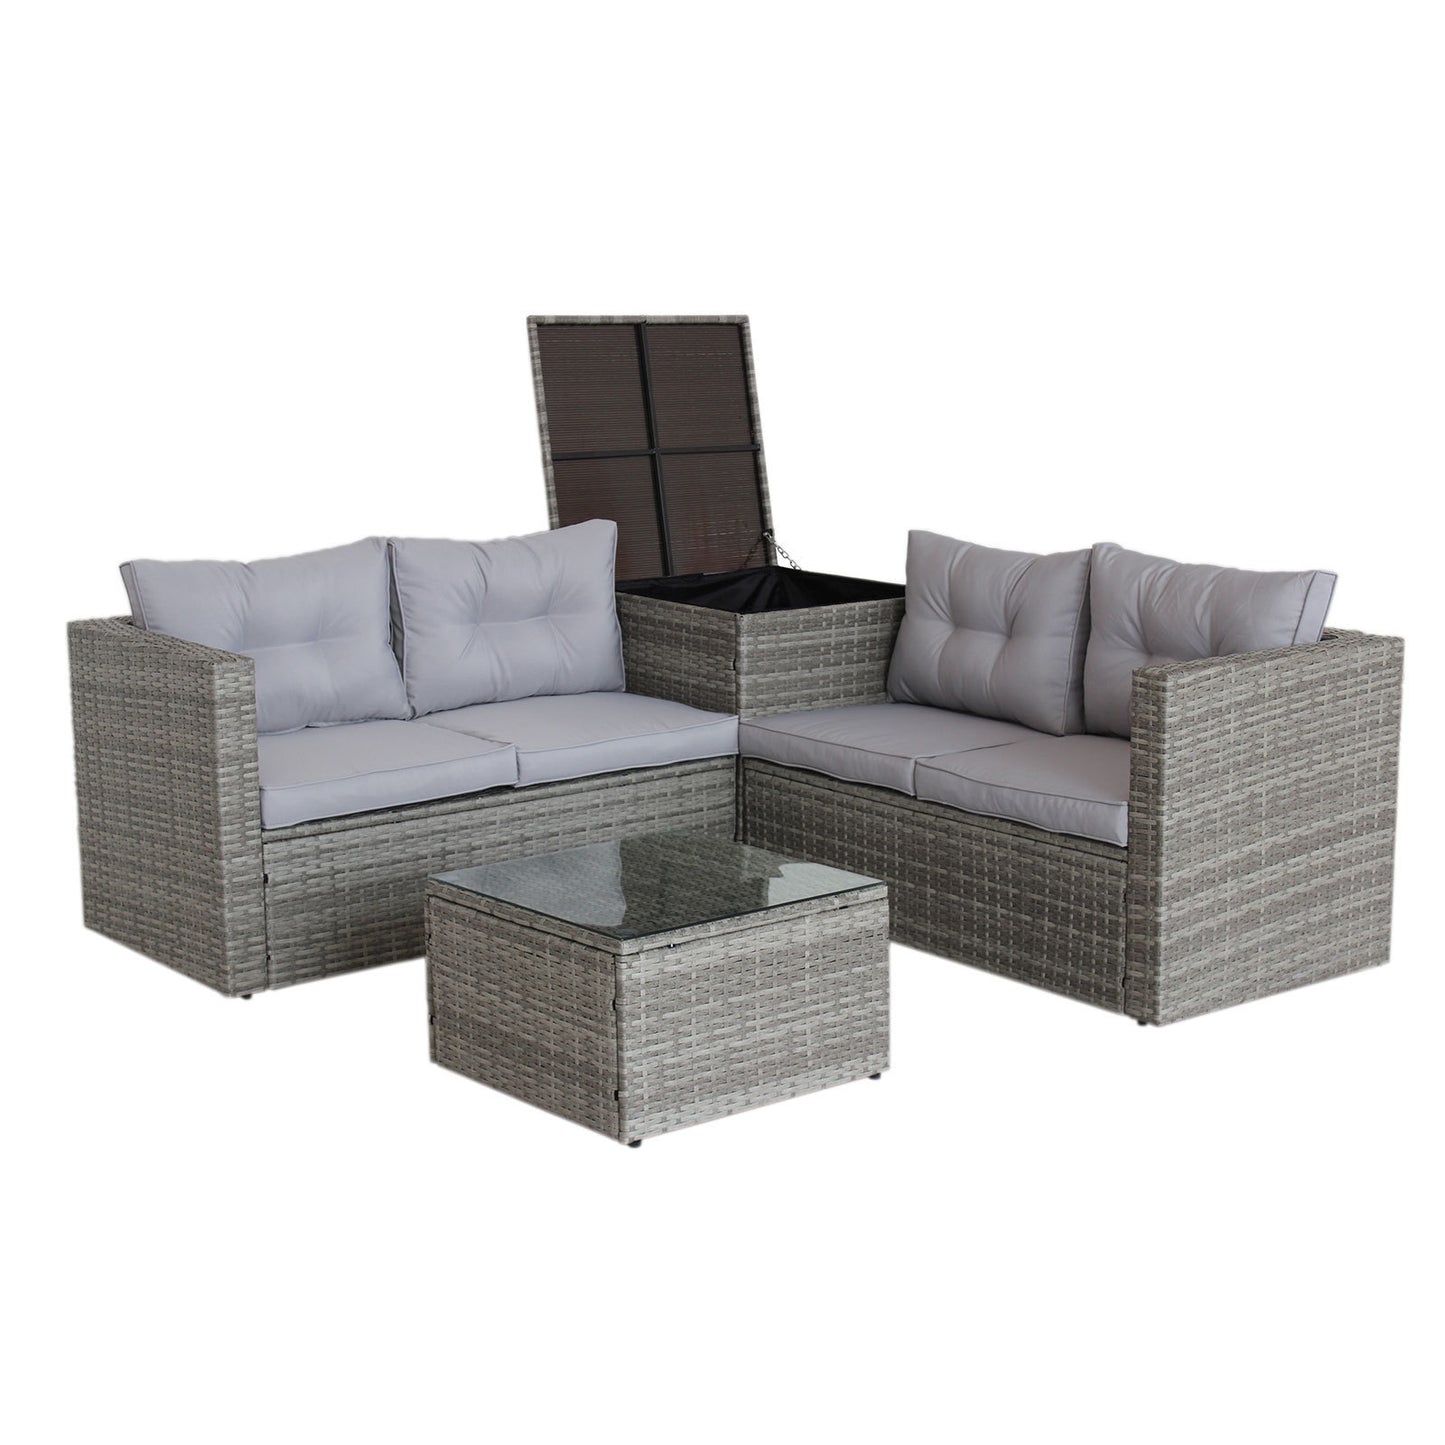 4 Piece Patio Sectional Outdoor Furniture Sofa Set, Storage